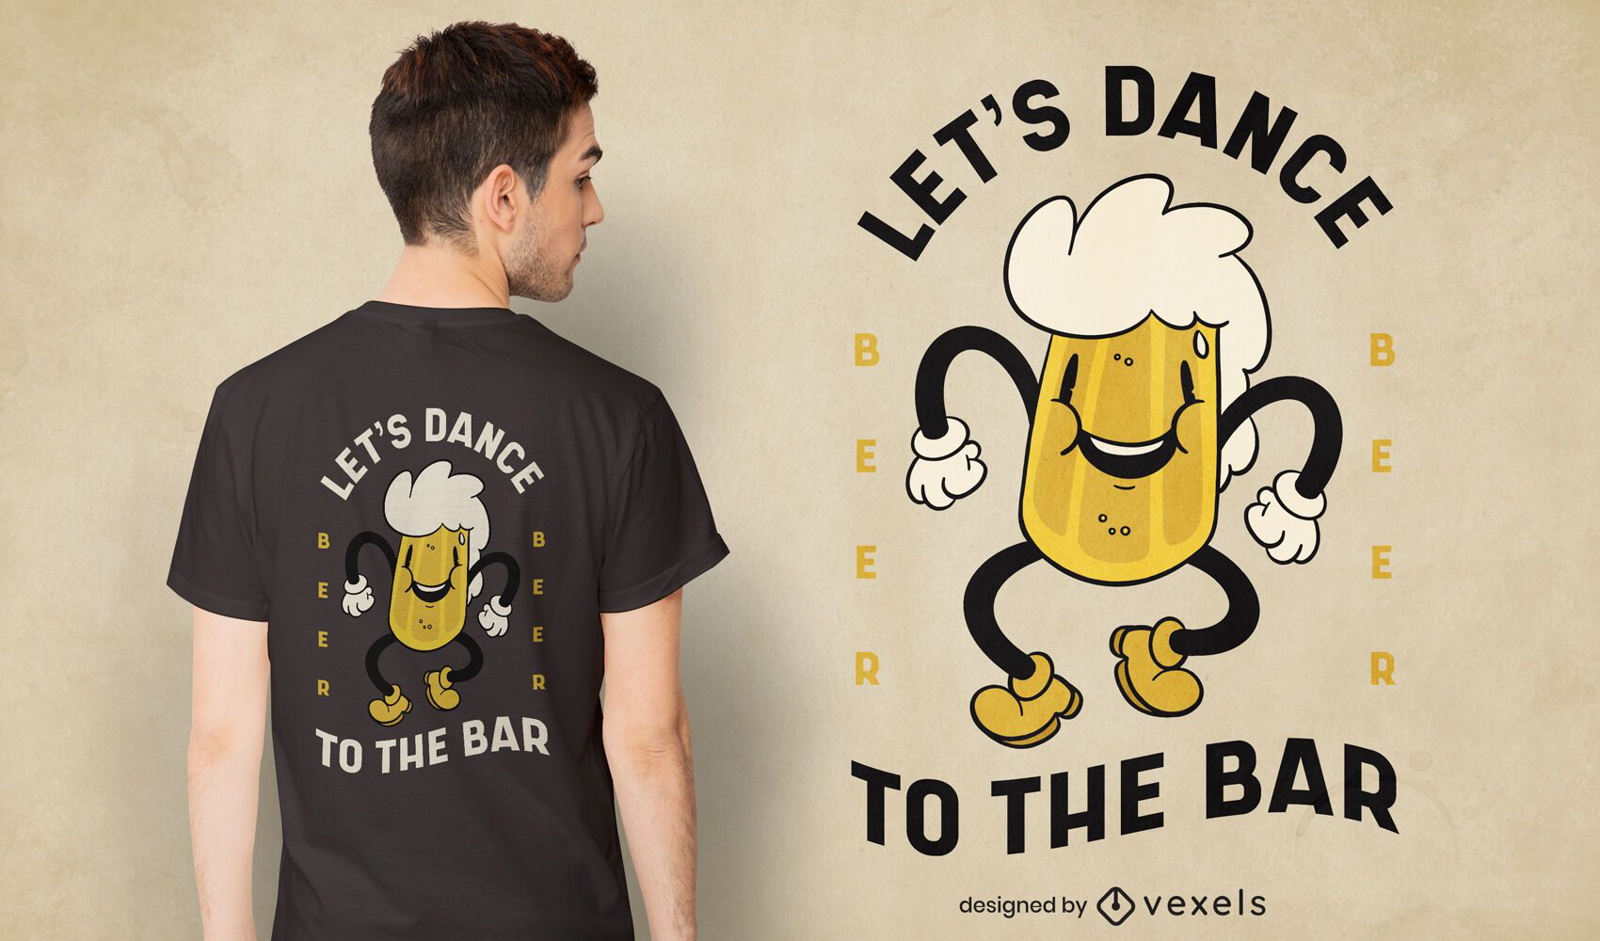 Dance to the bar t-shirt design